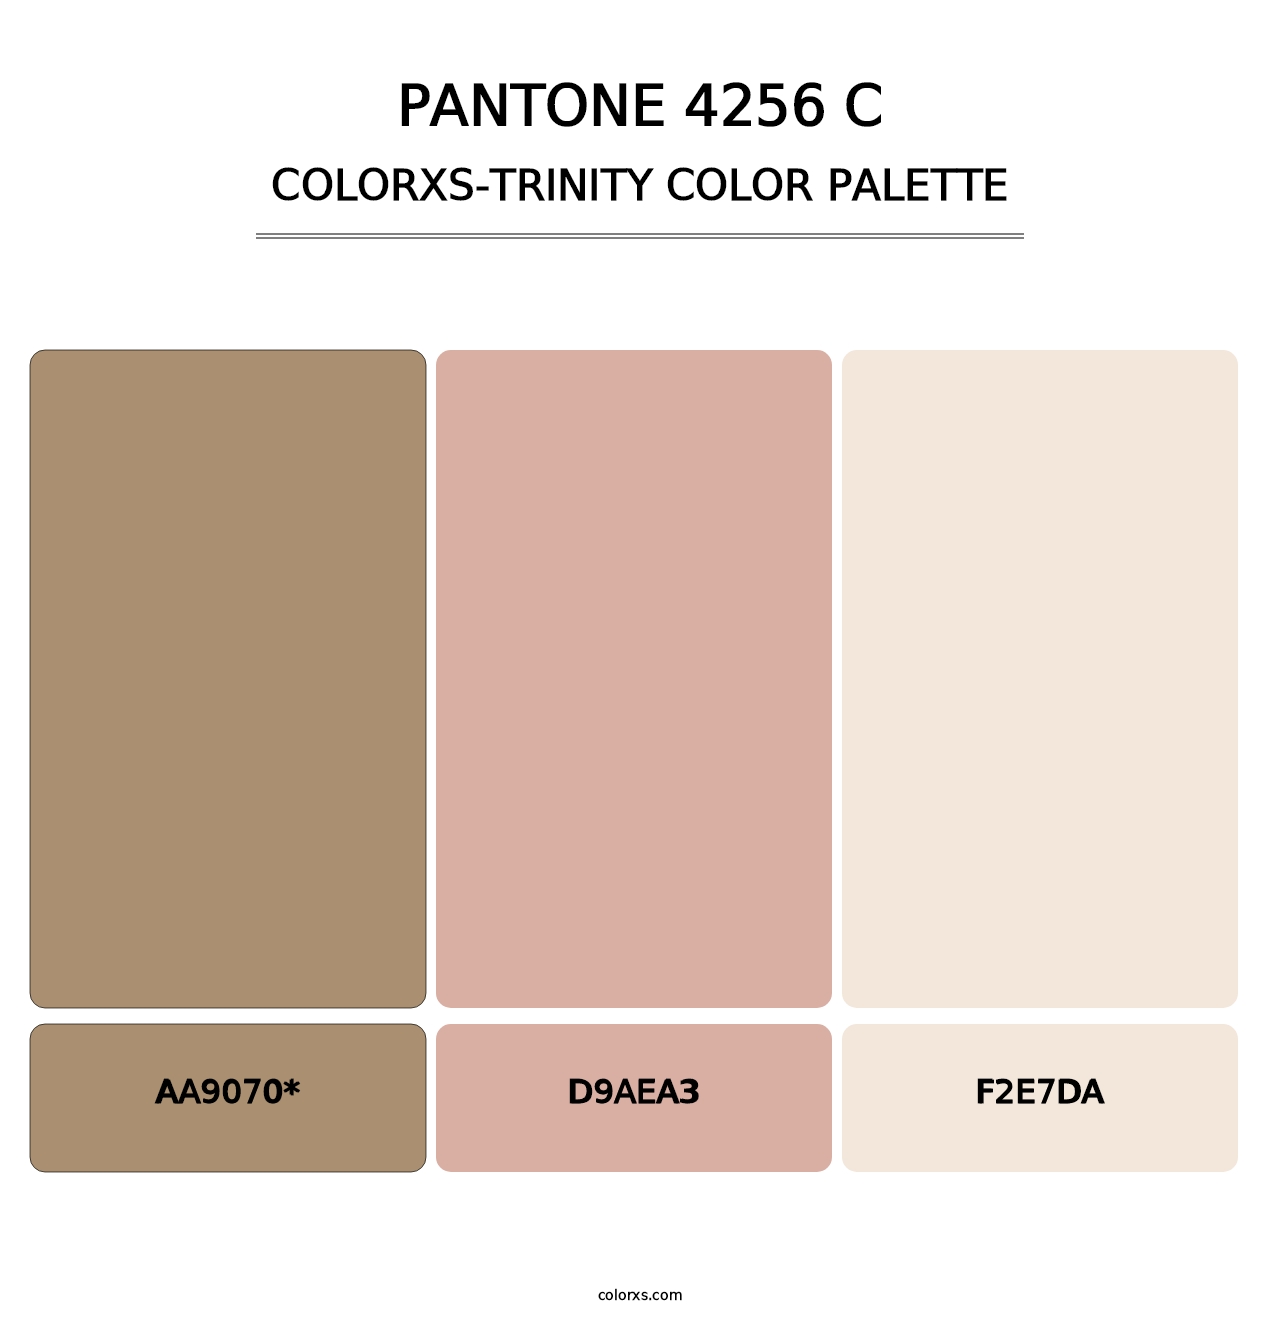 PANTONE 4256 C - Colorxs Trinity Palette